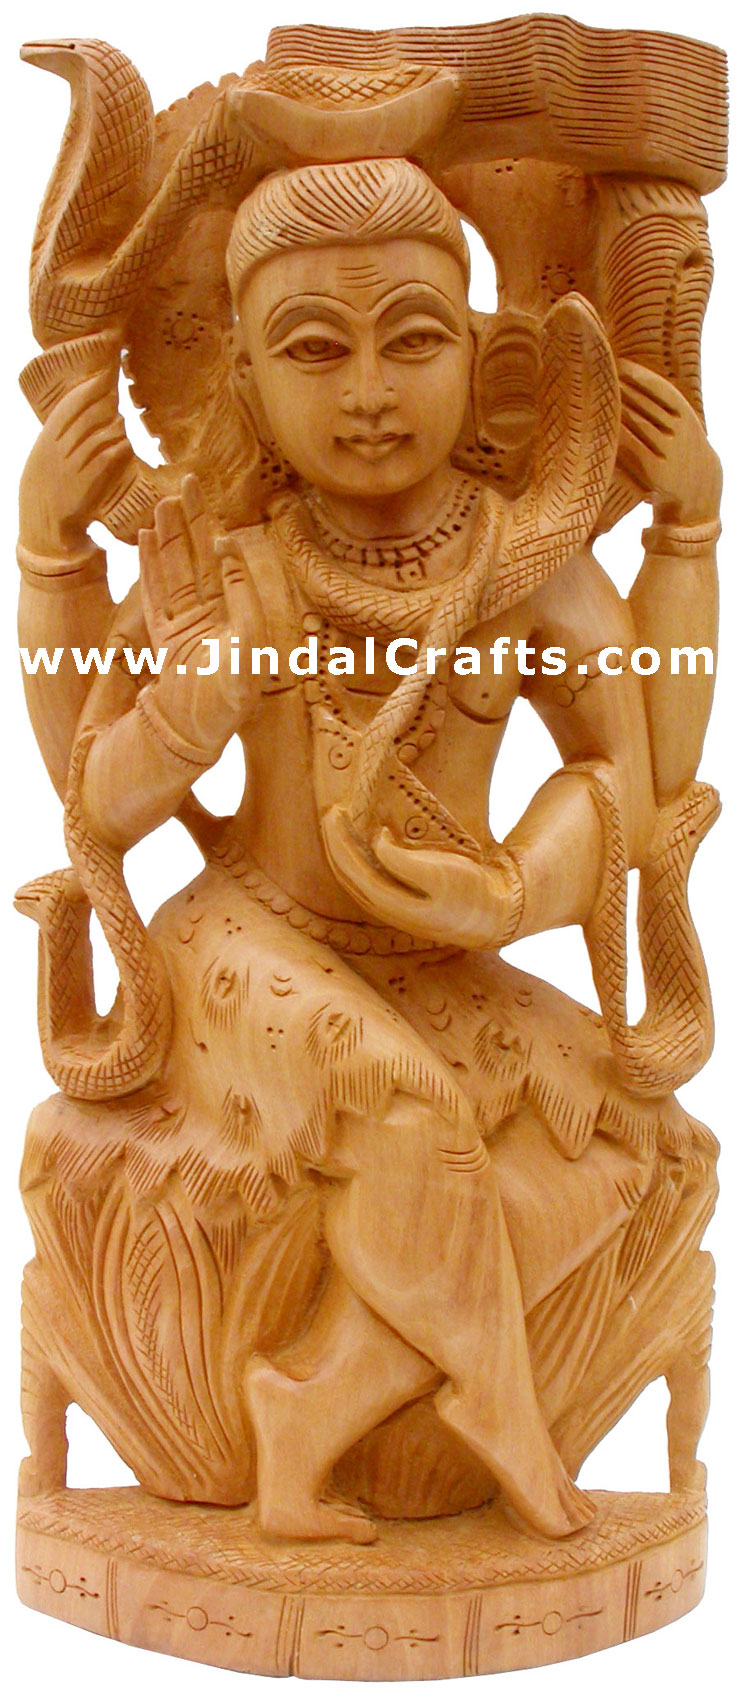 Handcrafted Wooden God Shiva Hindu Sculptures Art